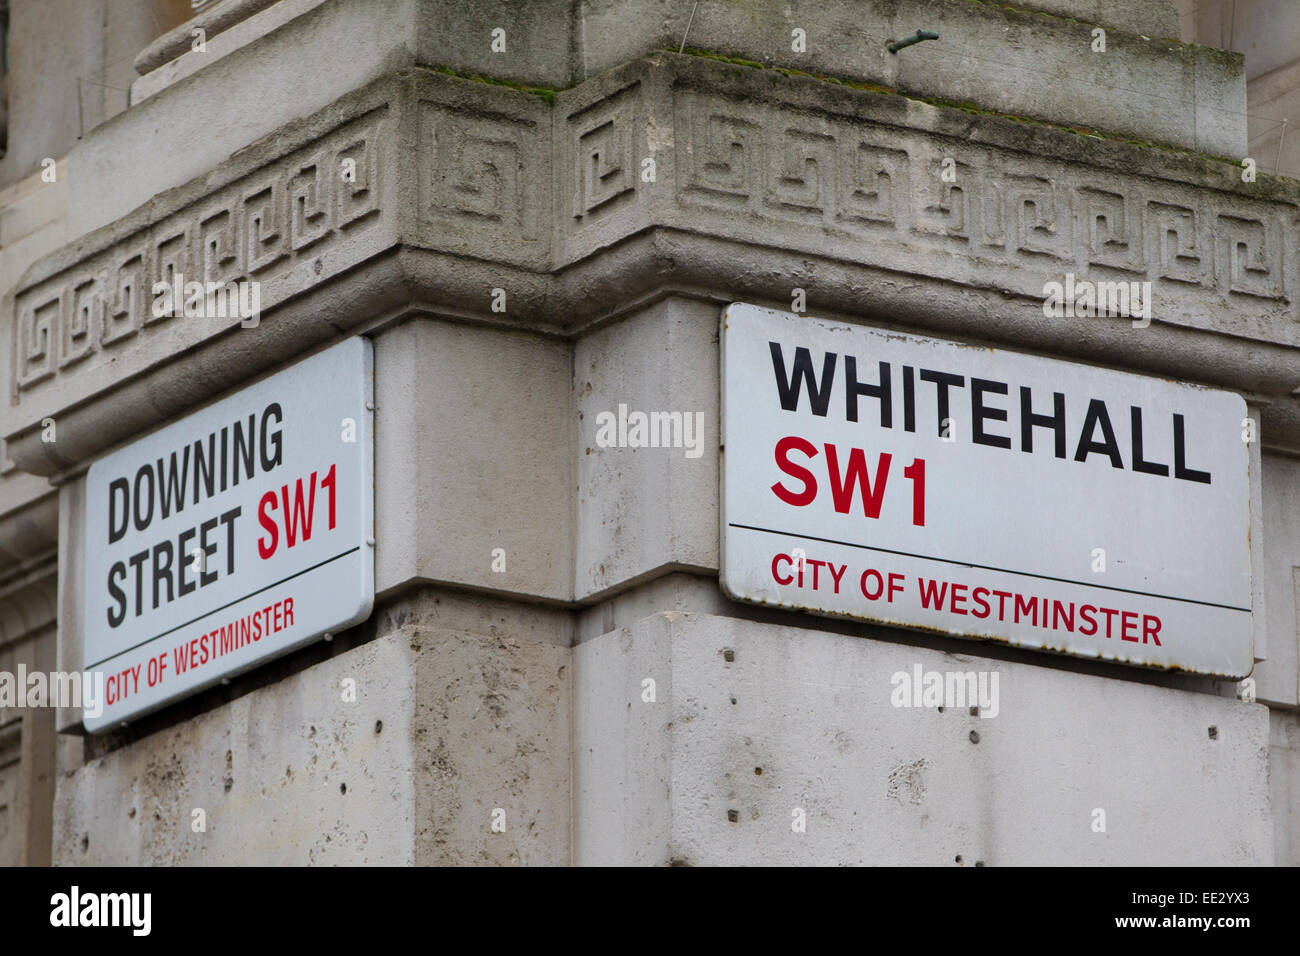 Downing Street e Whitehall segni sulle strade adiacenti in Westminster, Londra, Inghilterra, Regno Unito Foto Stock